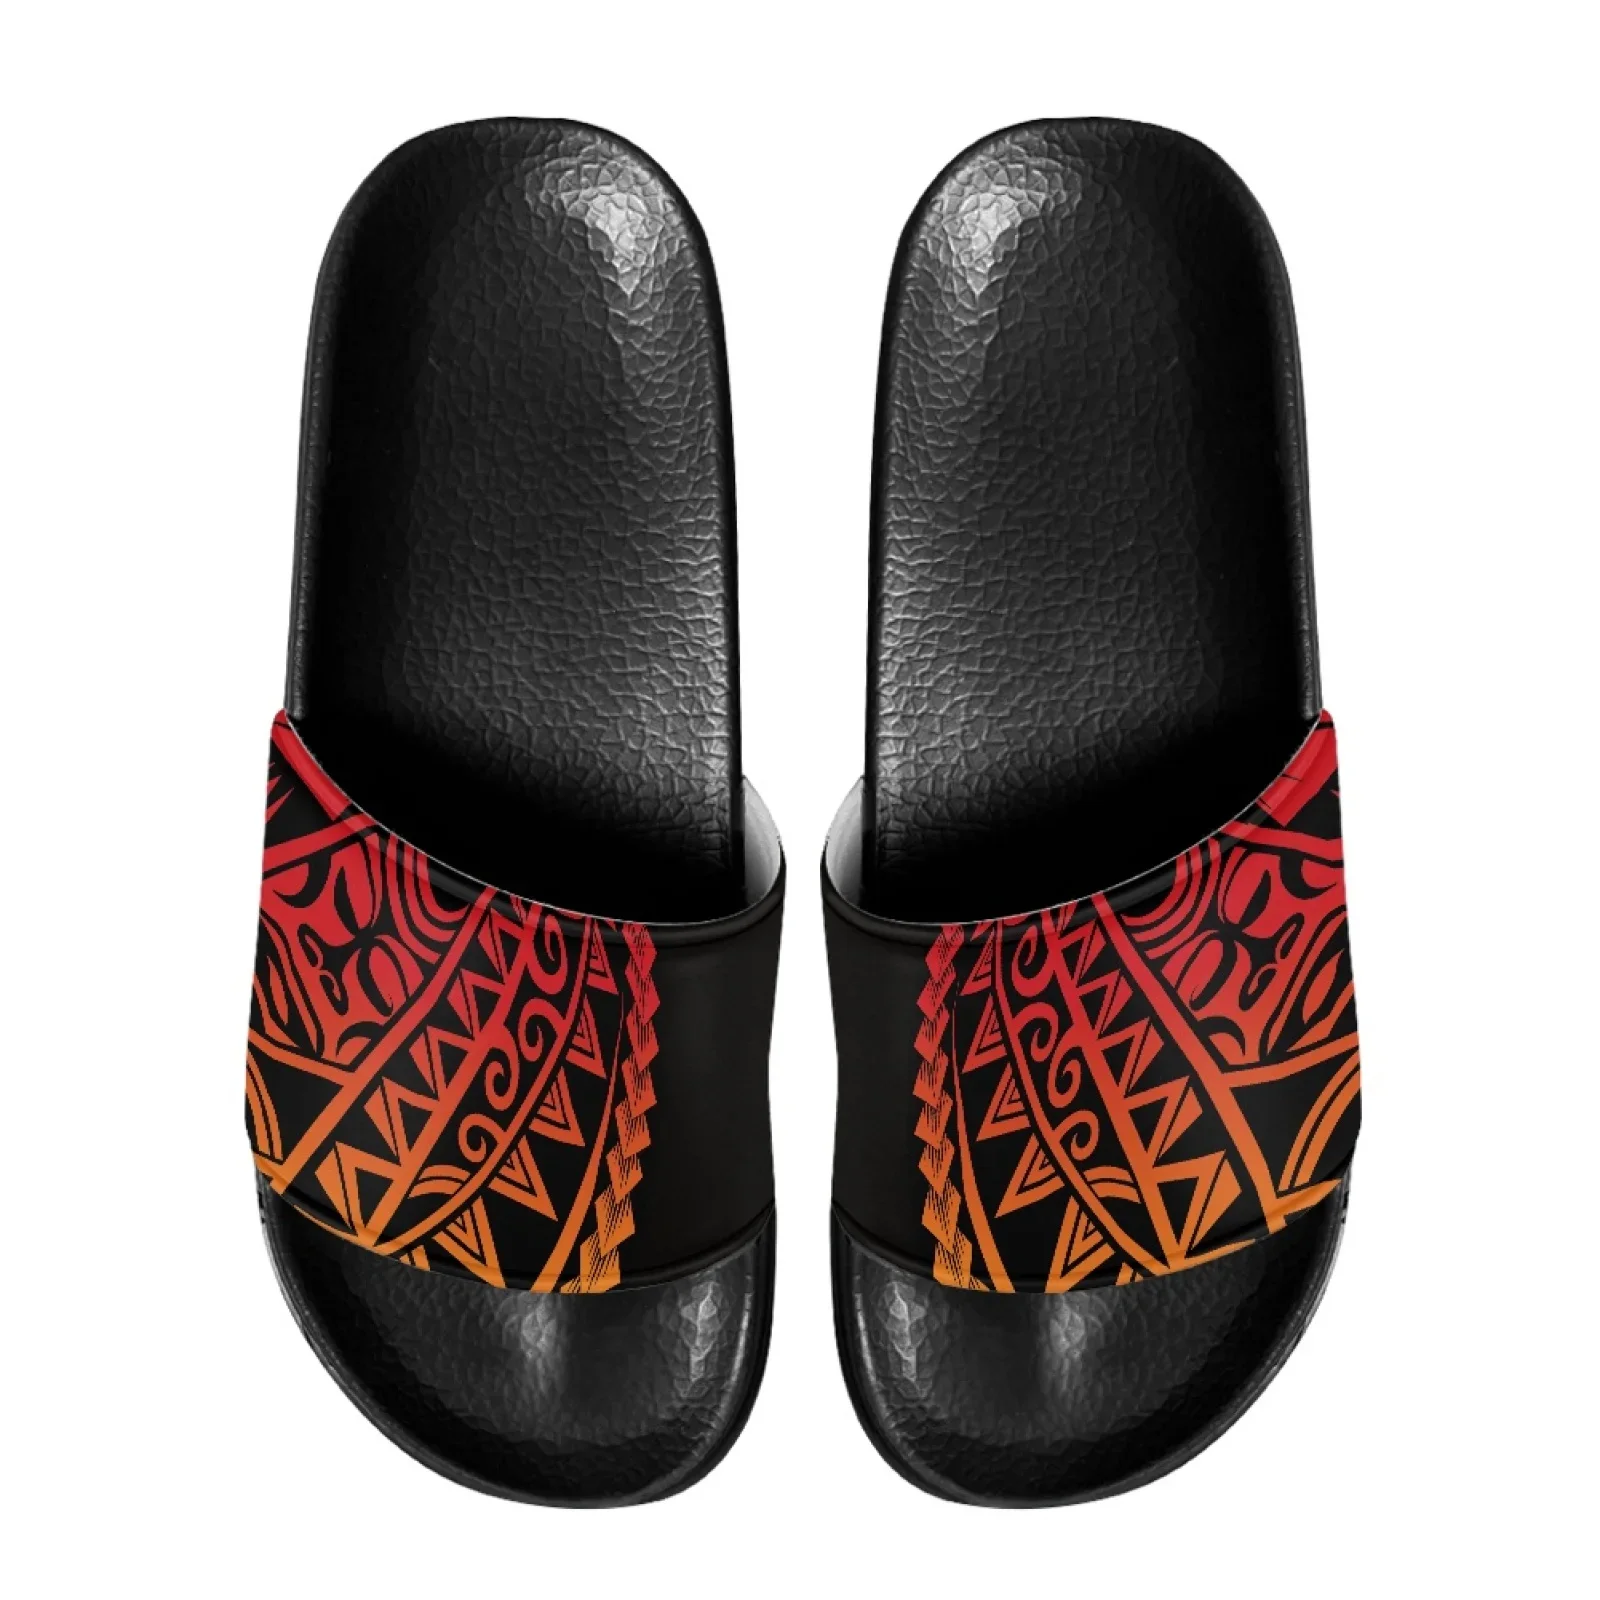 

Polynesian Tribal Samoan Totem Tattoo Samoa Prints Men's Beach Slippers New Casual Round Toe Lightweight Waterproof Fashion Wear